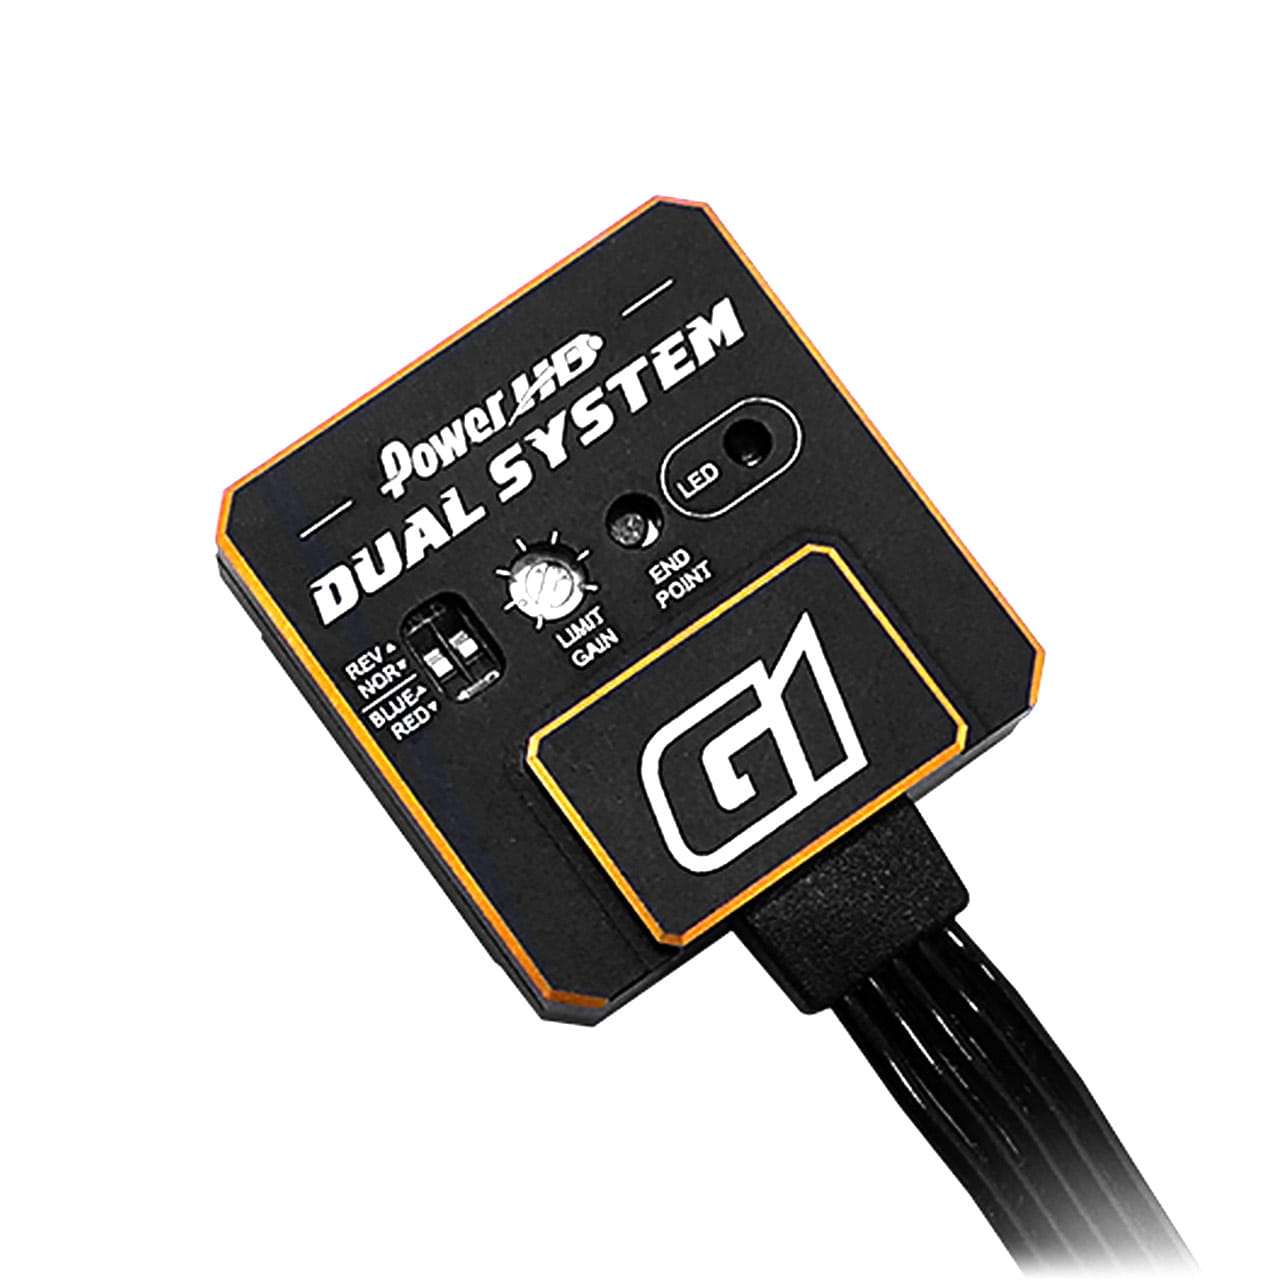 Power HD gyro-g1-gold